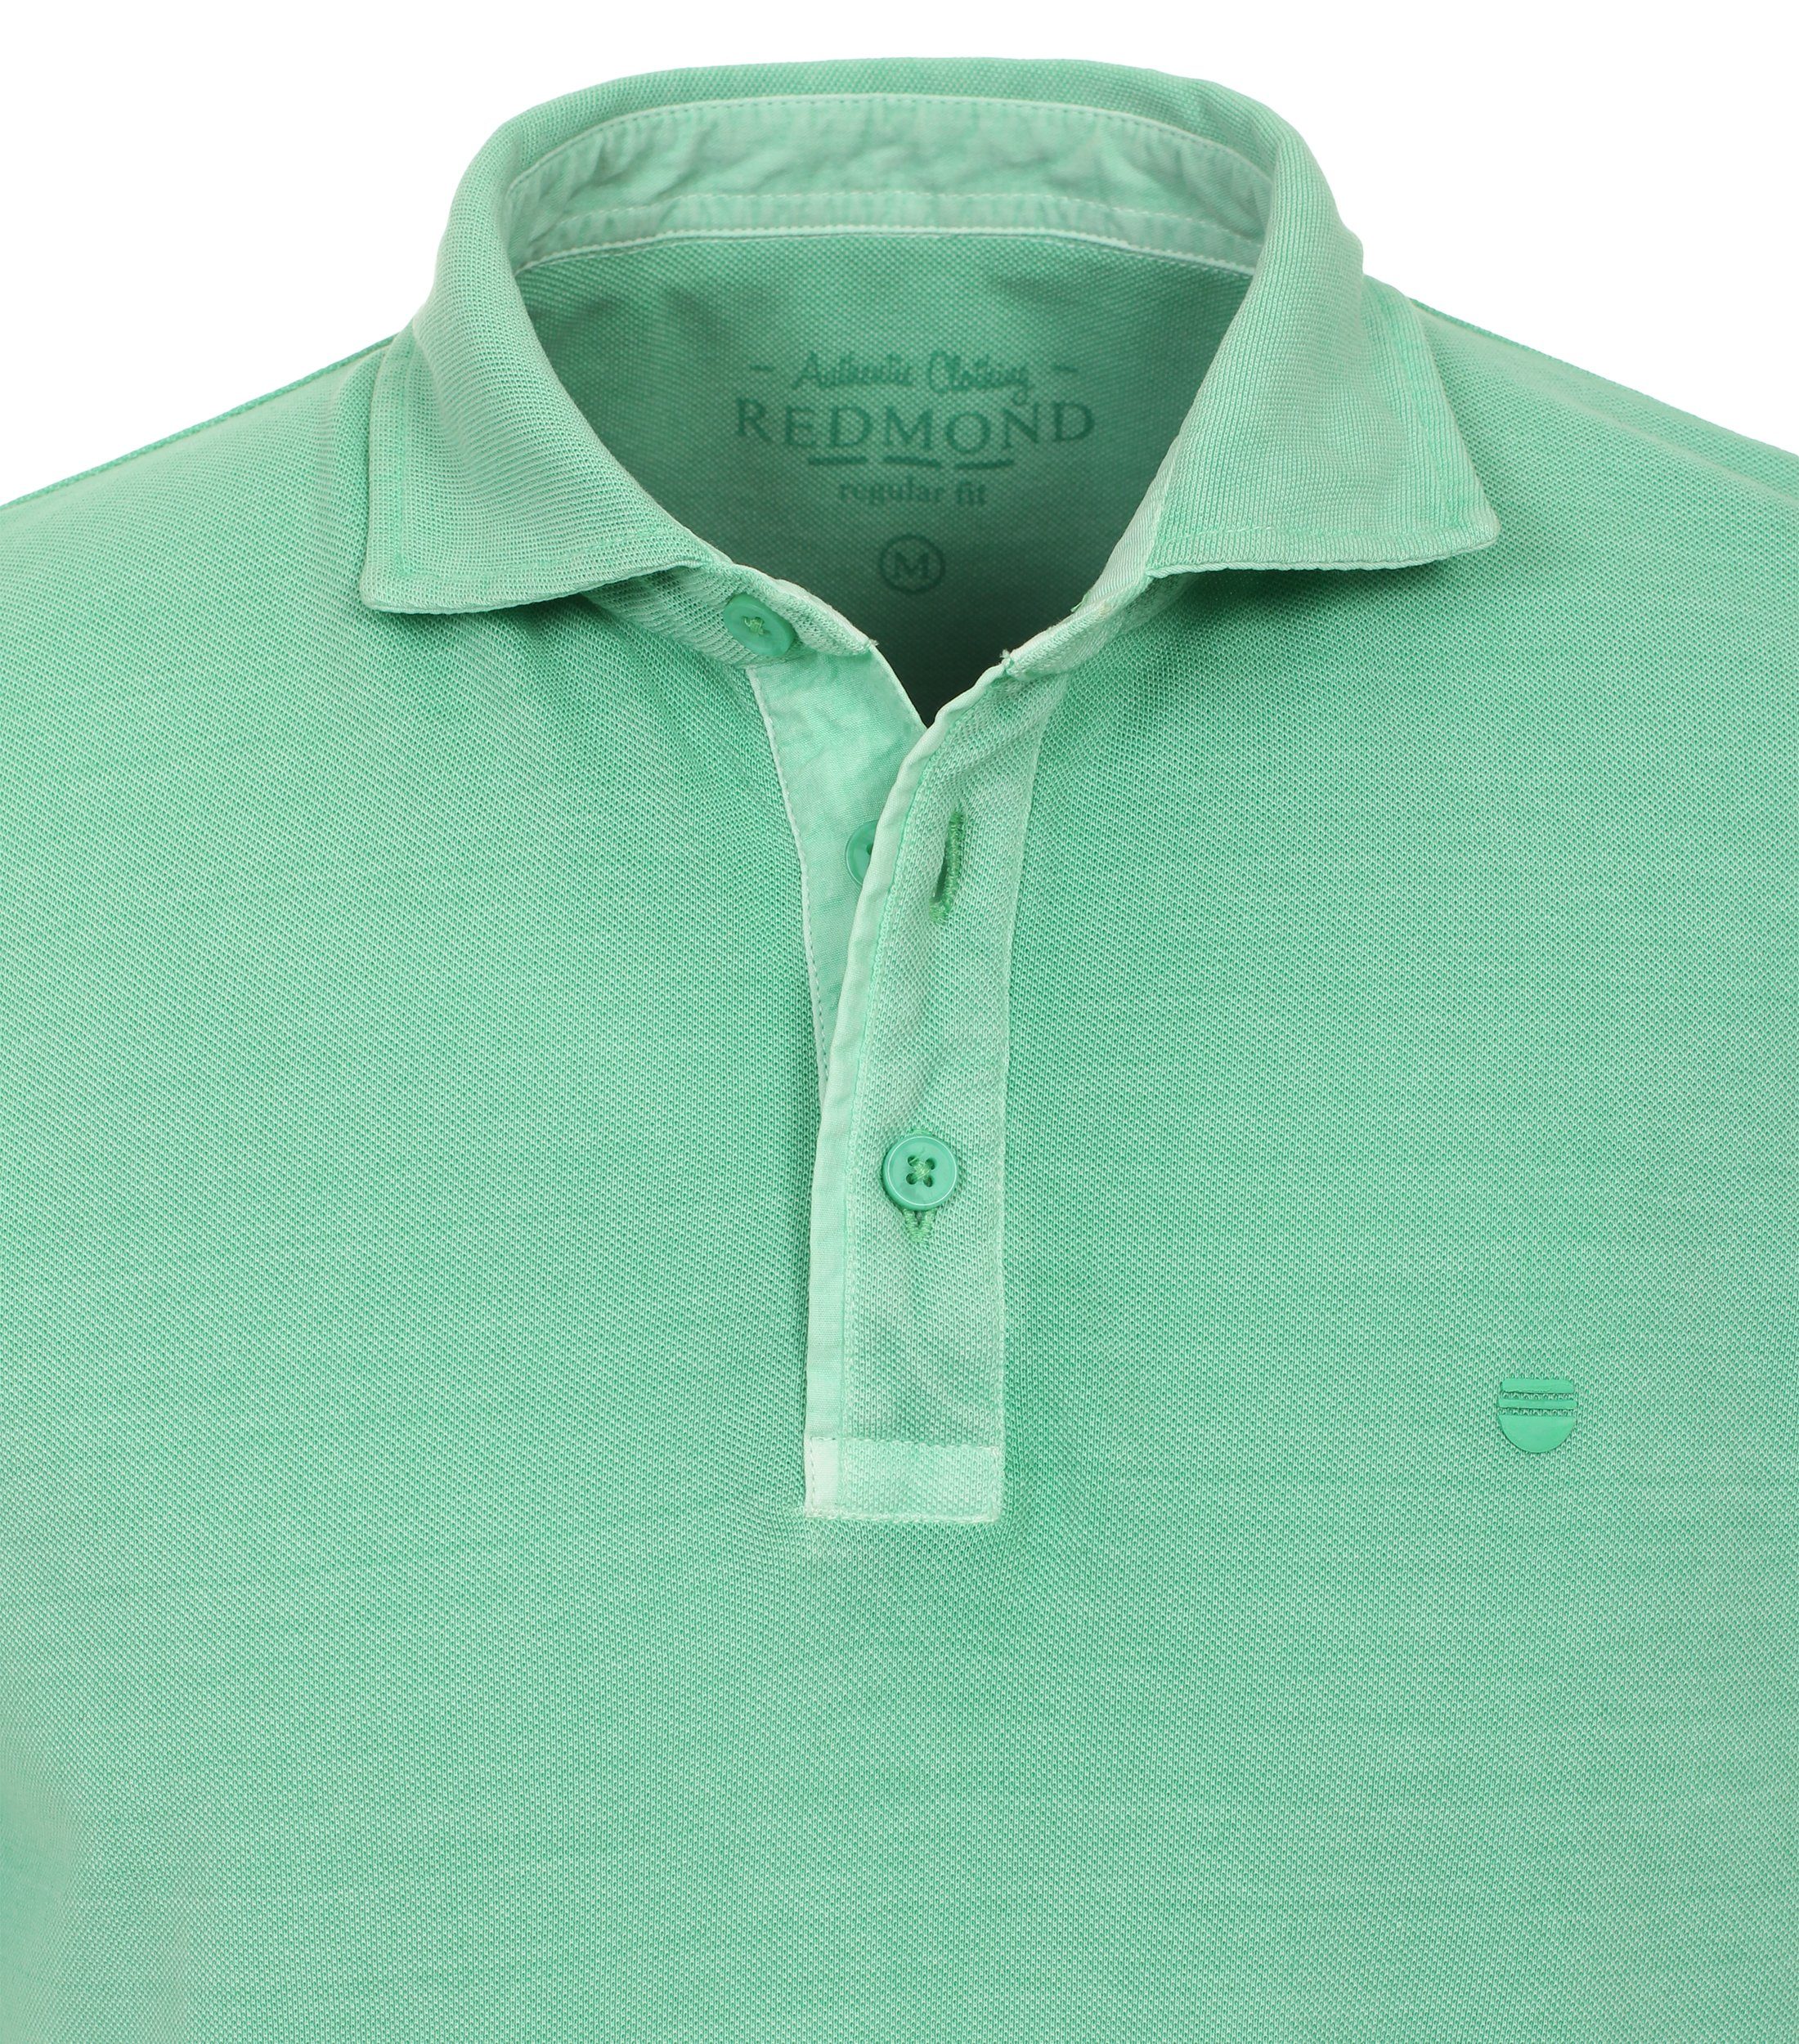 grün Redmond 60 uni Poloshirt